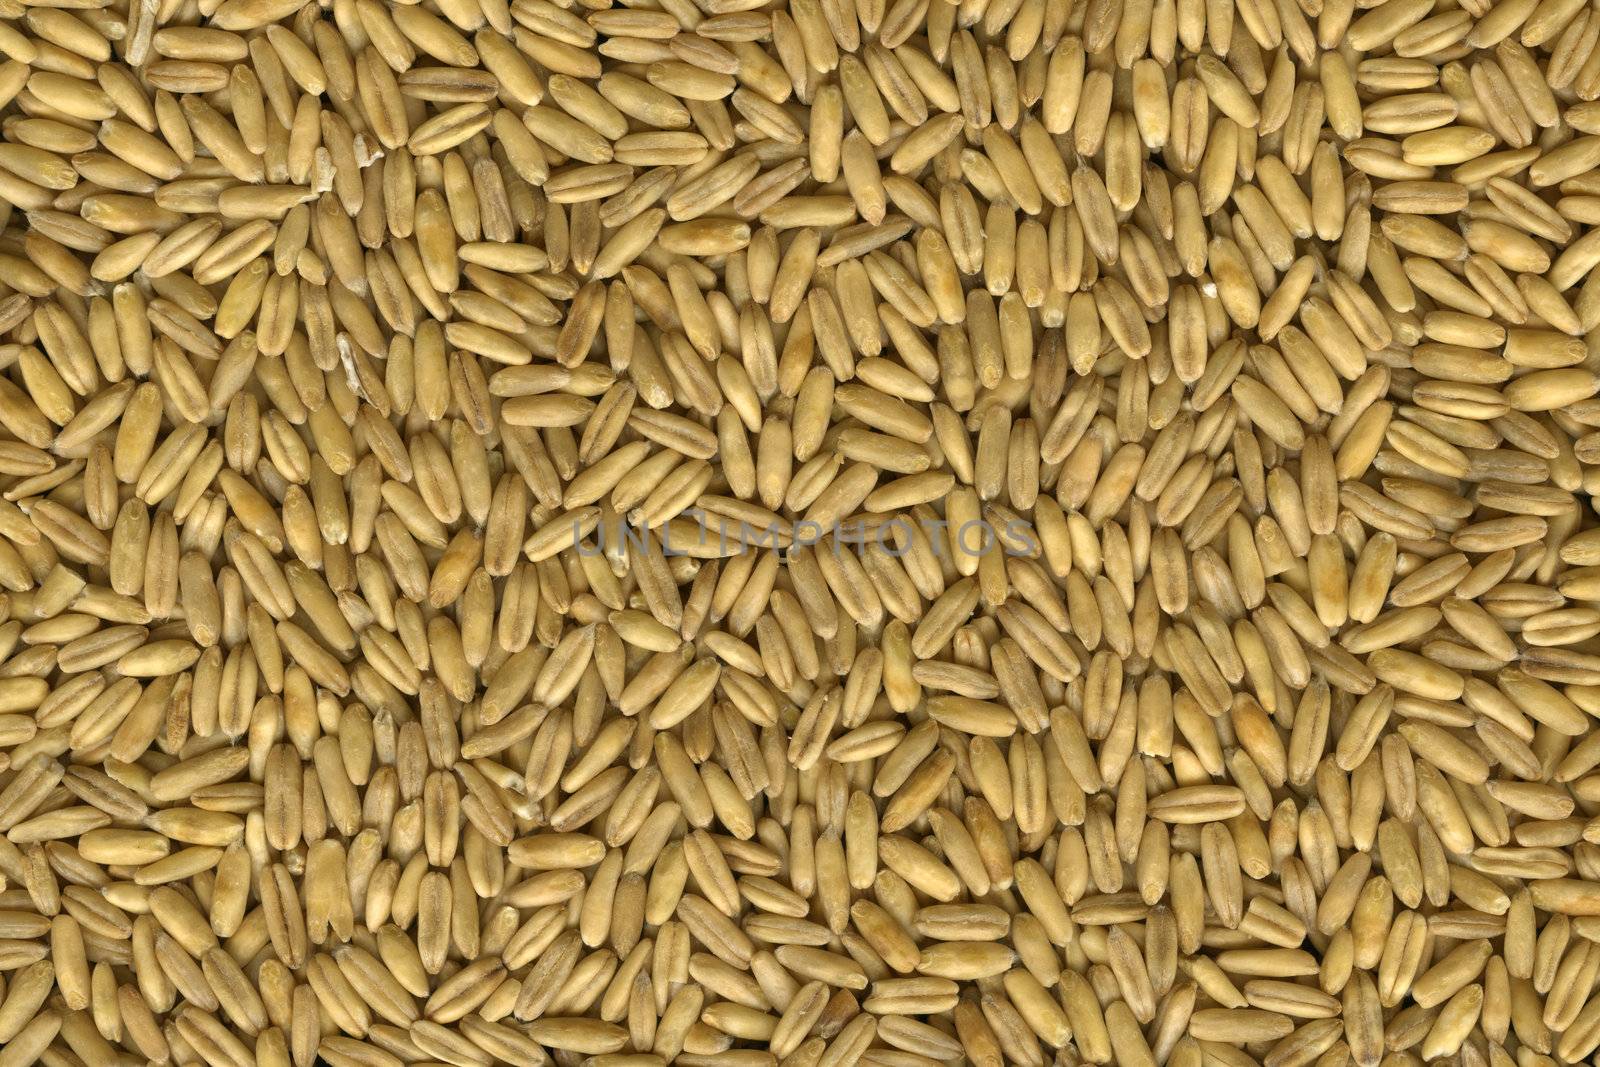 macro shot of oats (whole groats) background